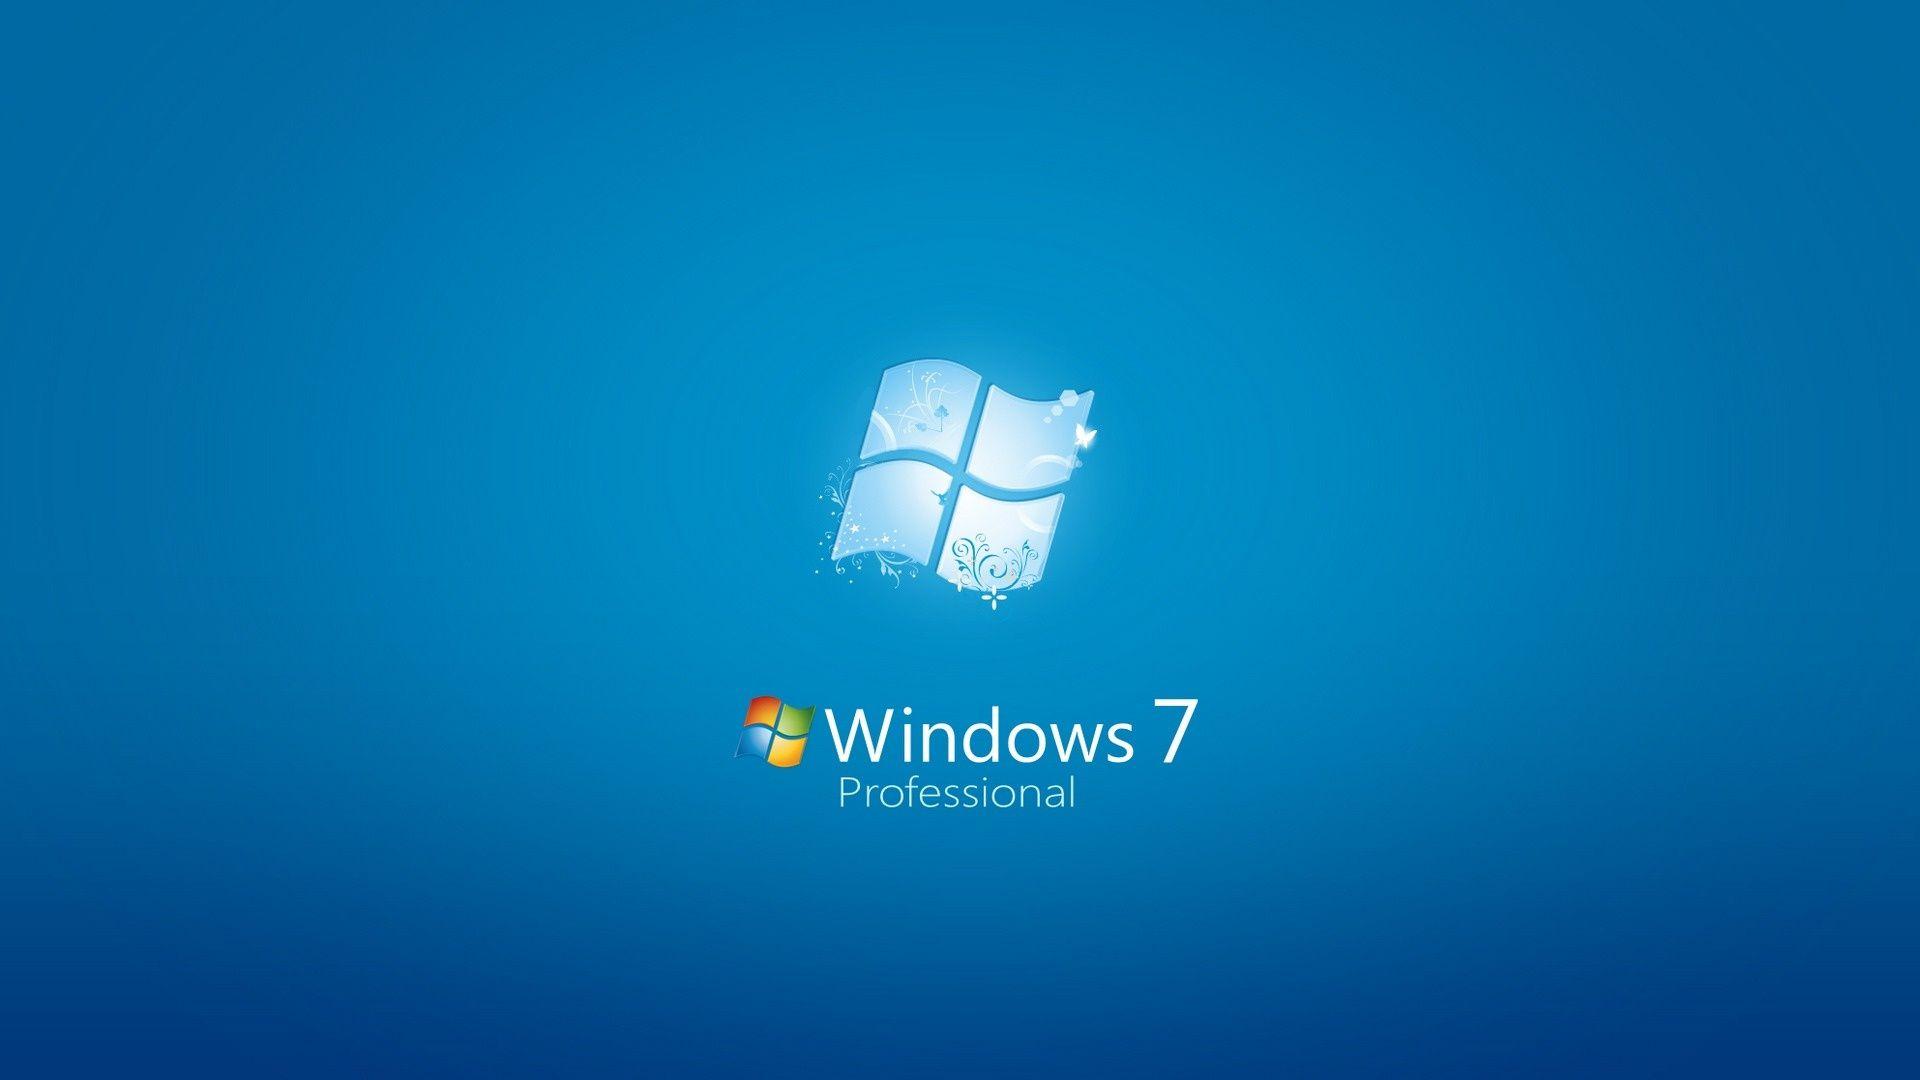 Wallpaper For > Background Image For Desktop HD Of Windows 7